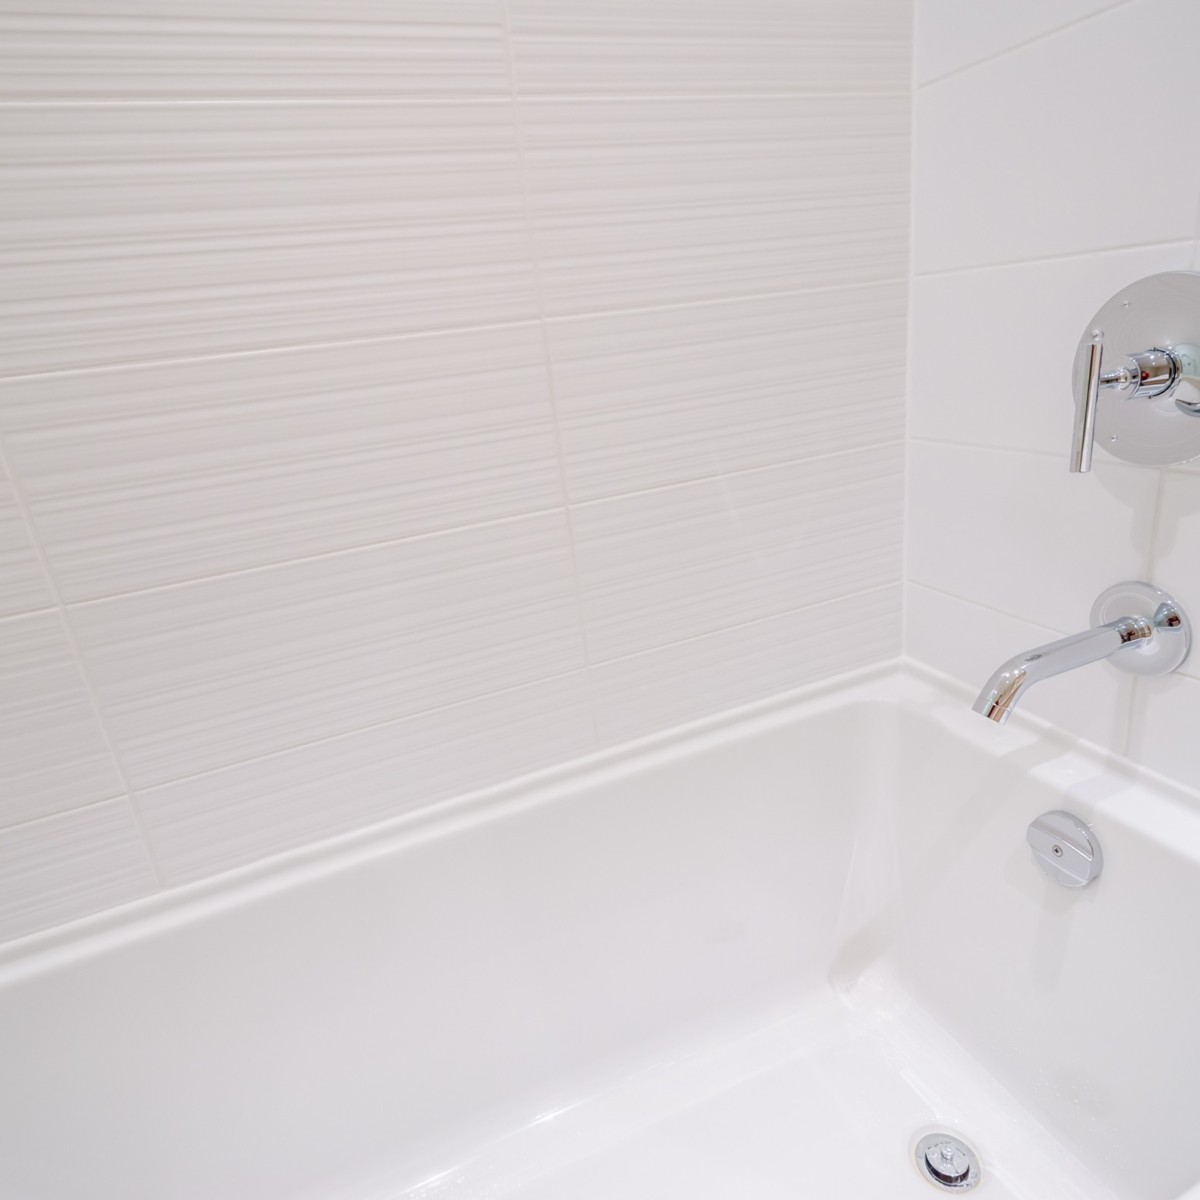 Cleaning A Textured Bathtub Floor, How To Clean A White Acrylic Bathtub